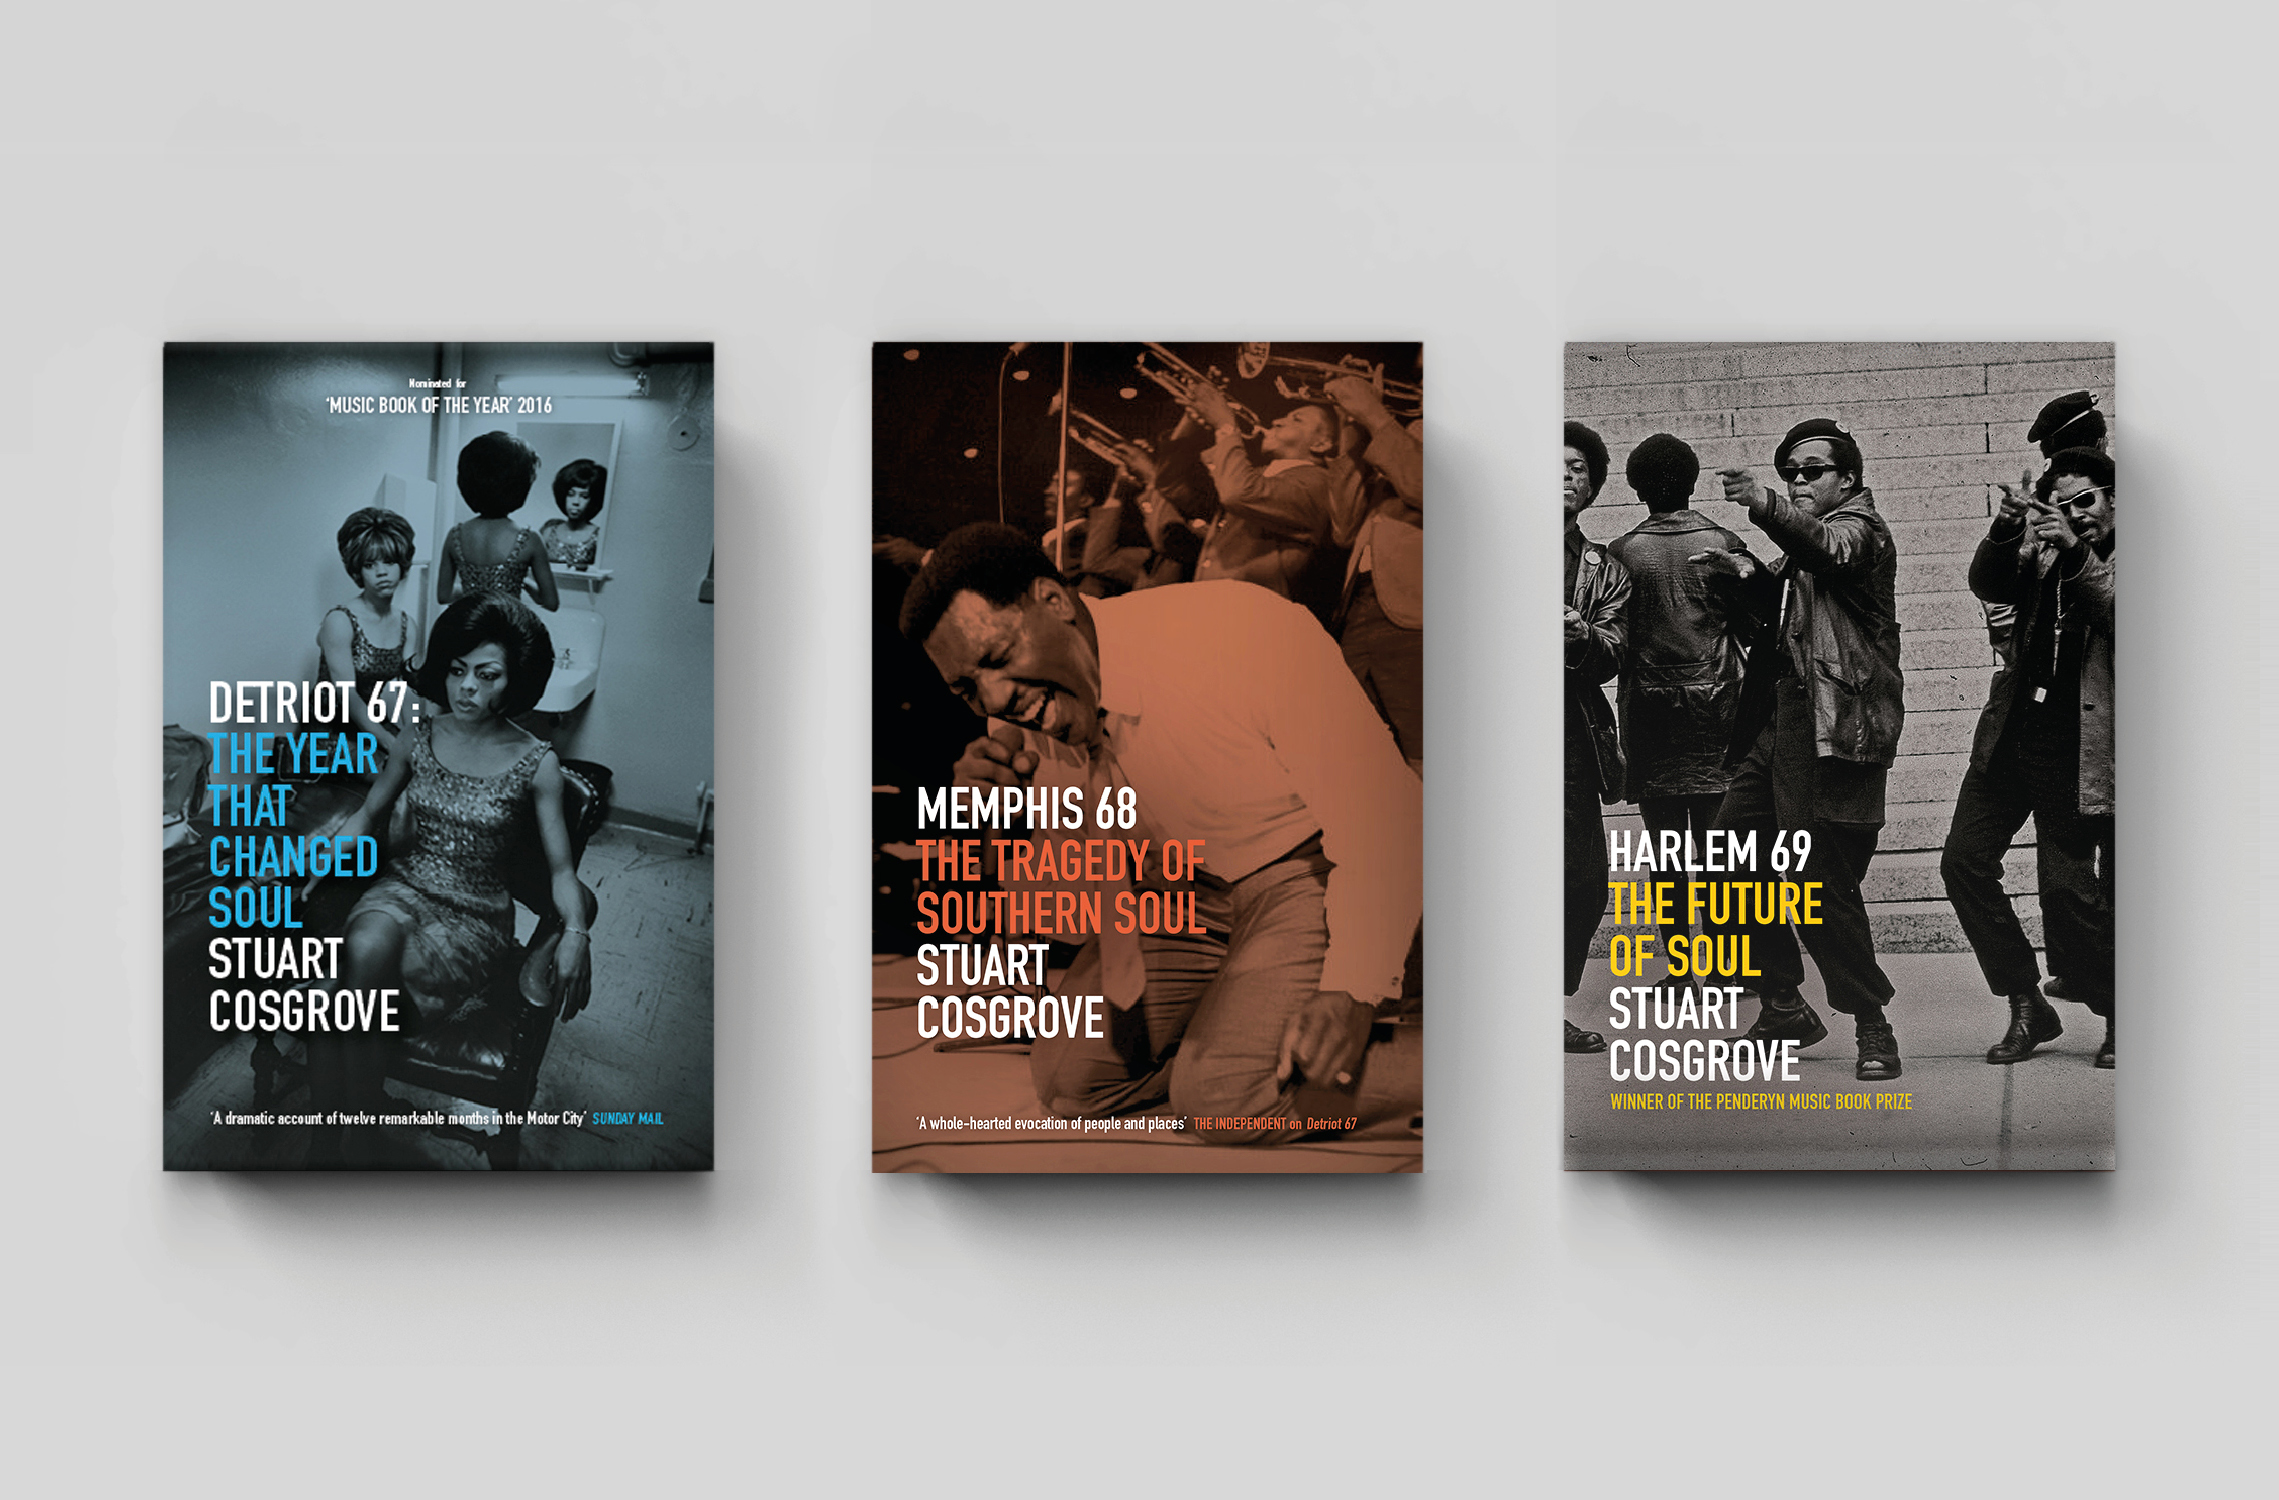 Detroit 67, Memphis 68 and Harlem 69 Book cover Designs